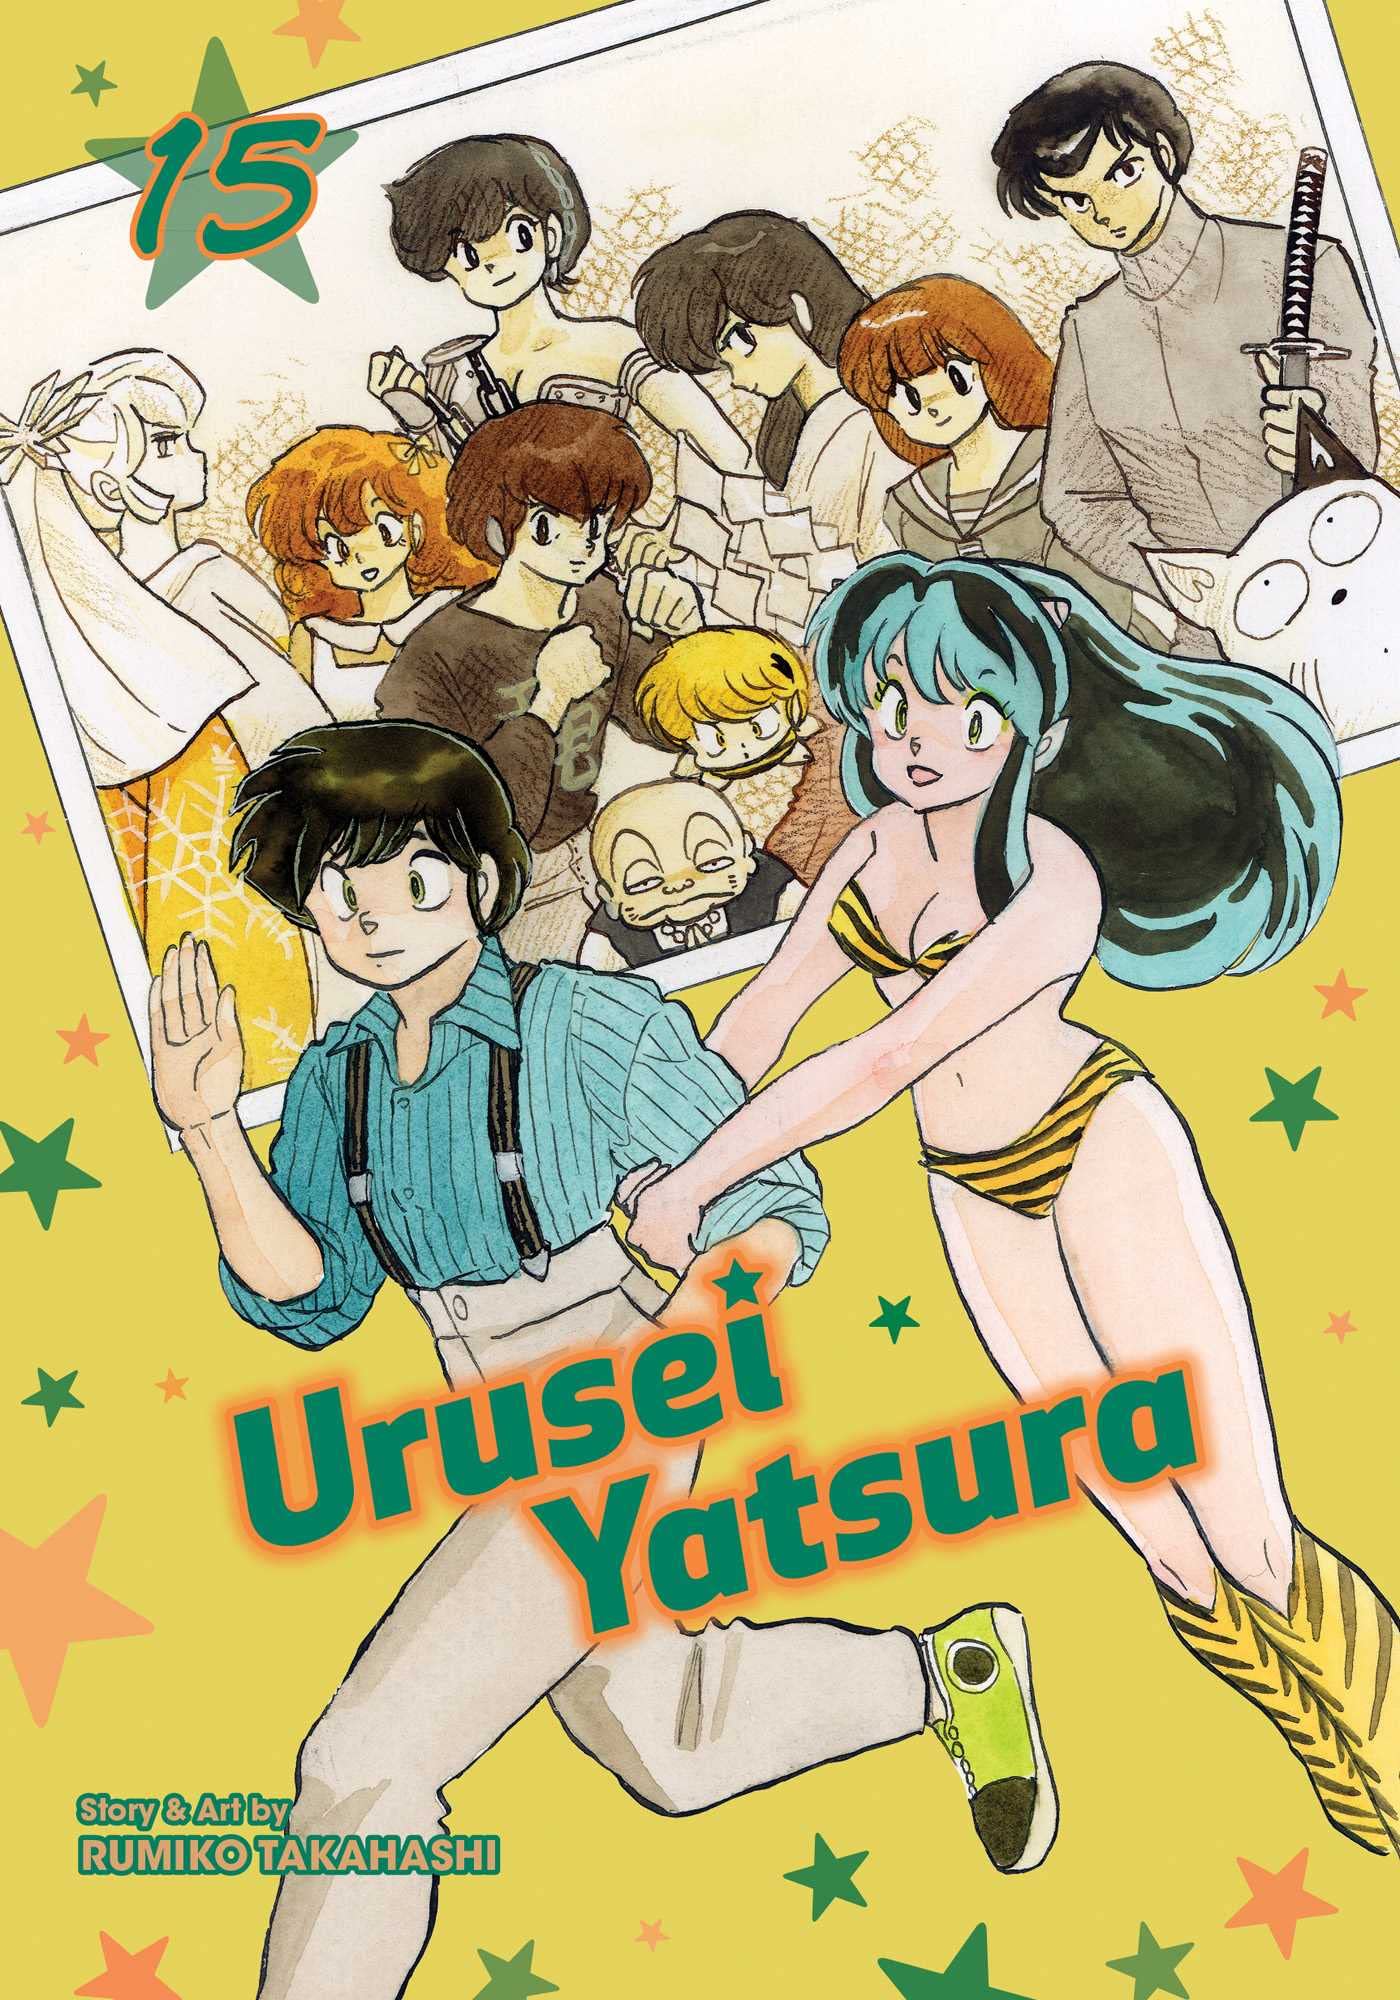 Urusei Yatsura Vol. 15